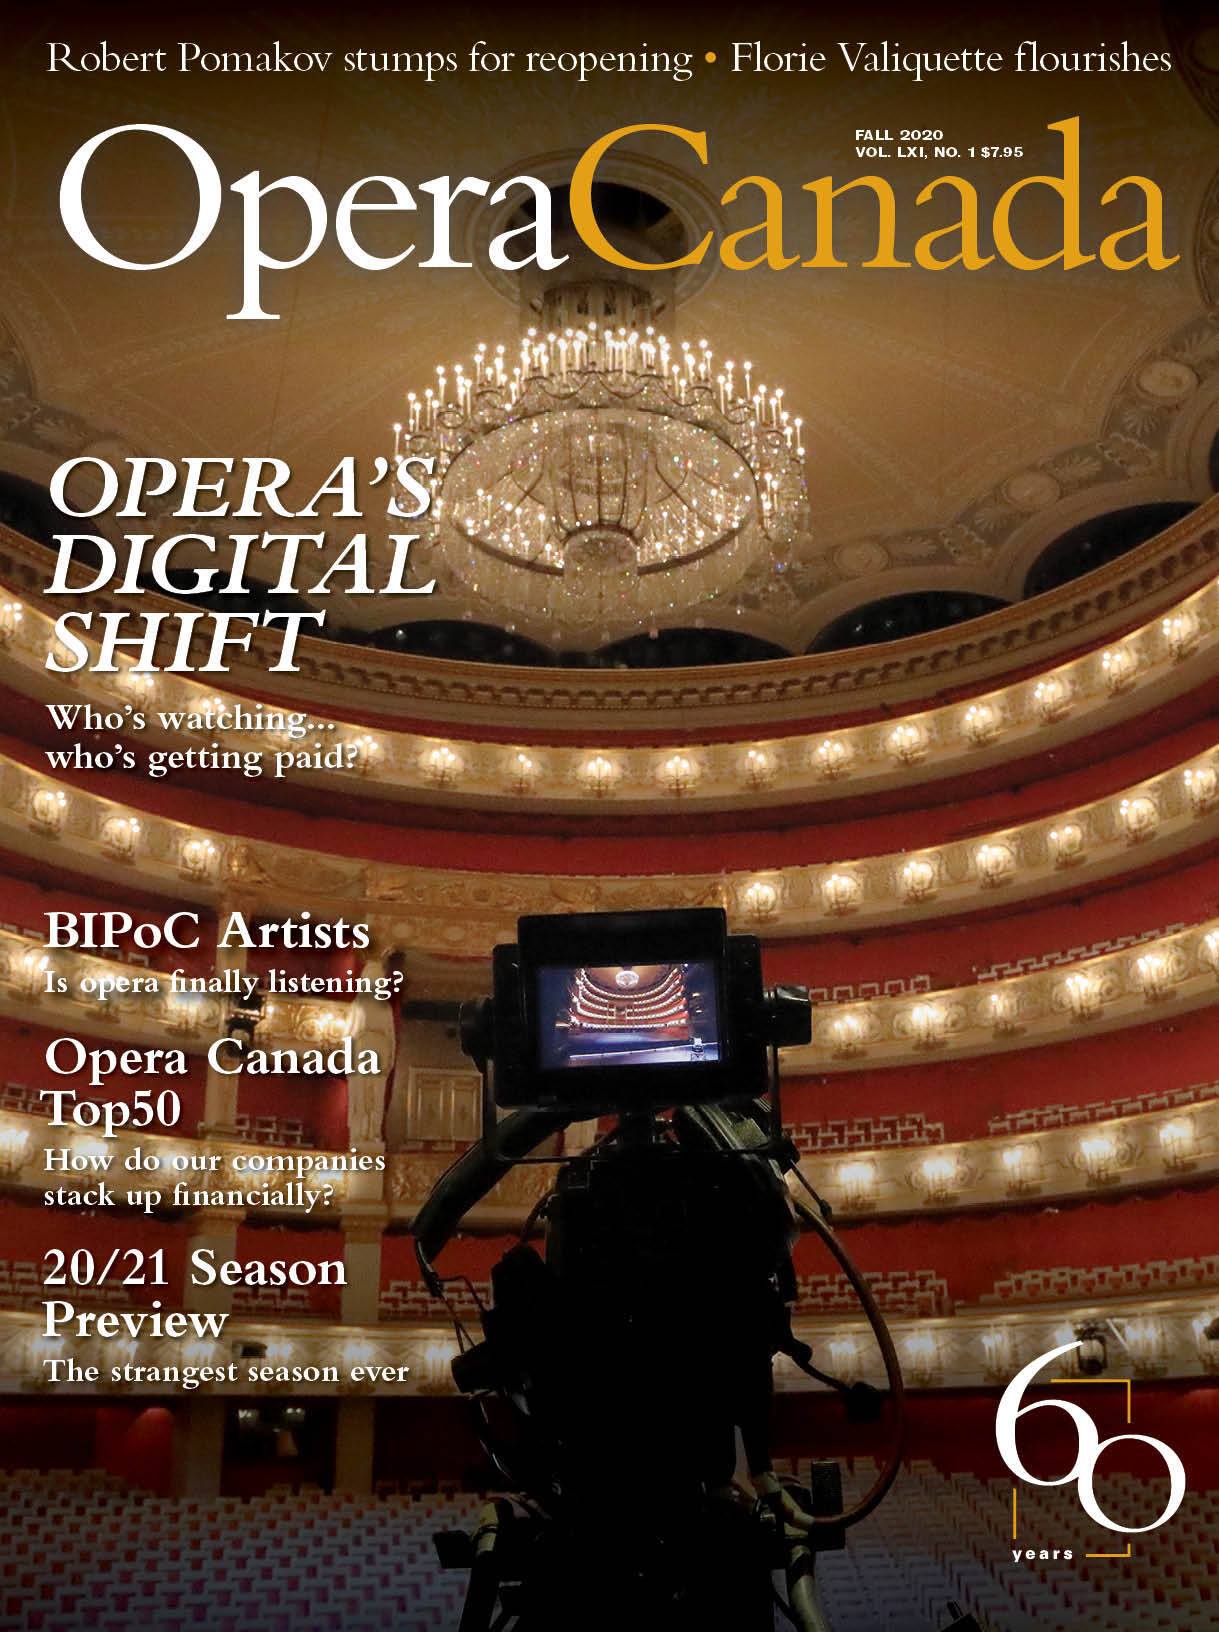 Bayerische Staatsoper, cover, story, feature, digital opera, magazine, Opera Canada, camera, auditorium, Munich, Europe, performance, music